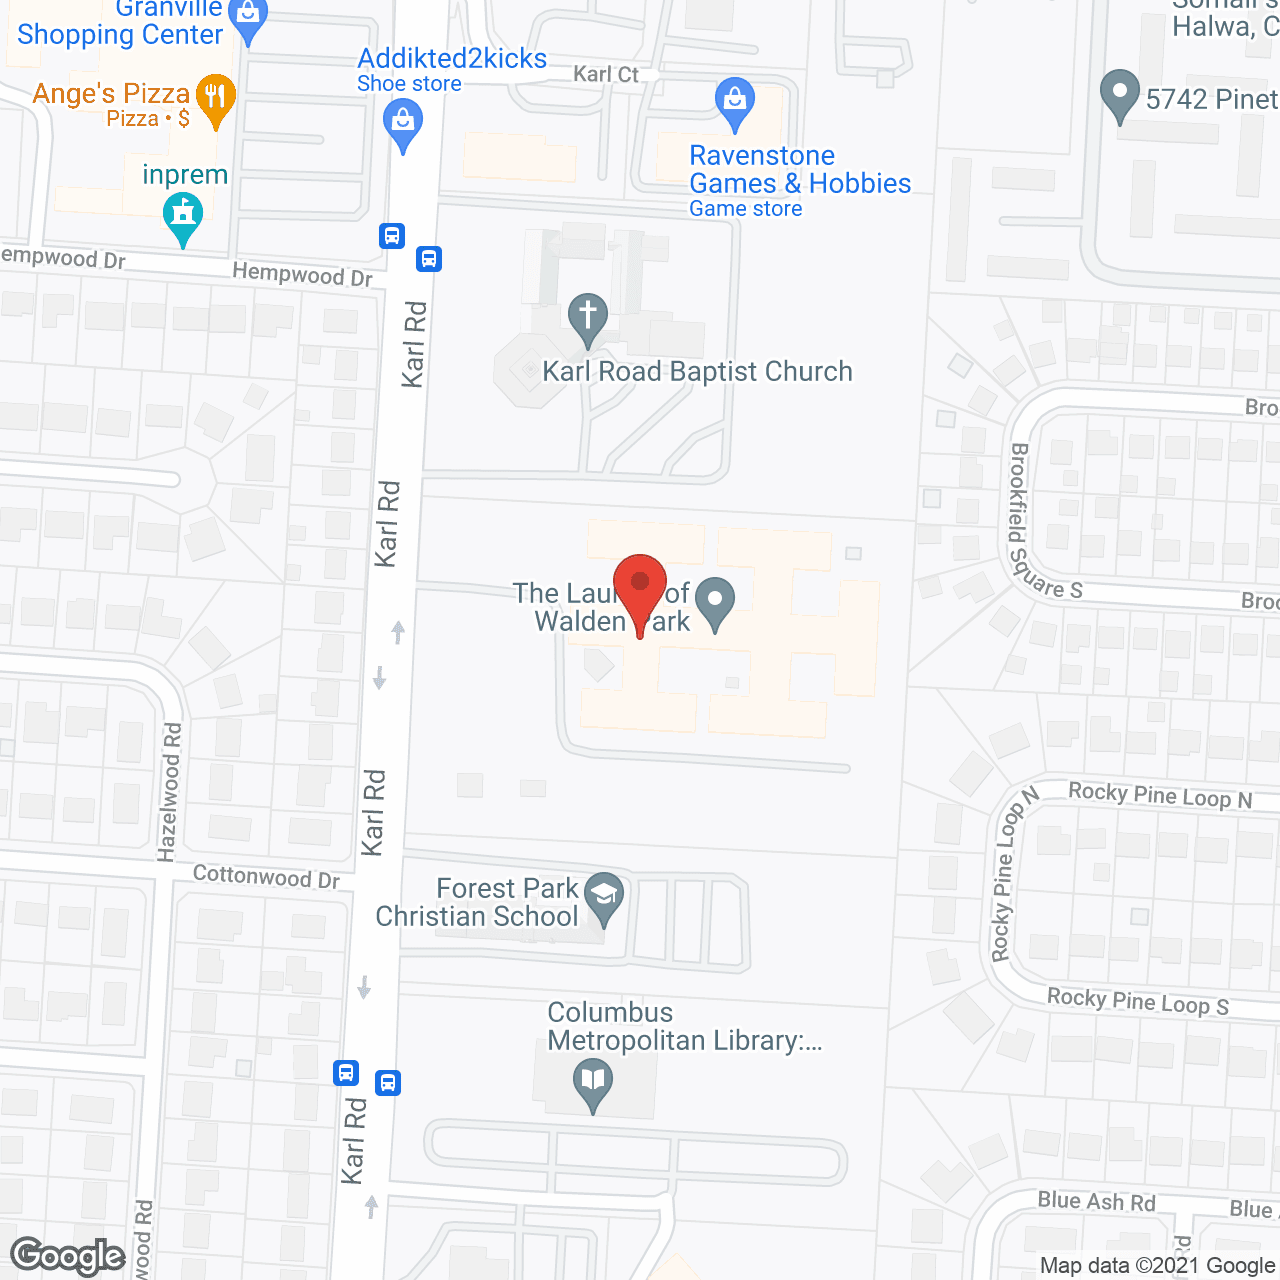 Villa Angela Care Center in google map